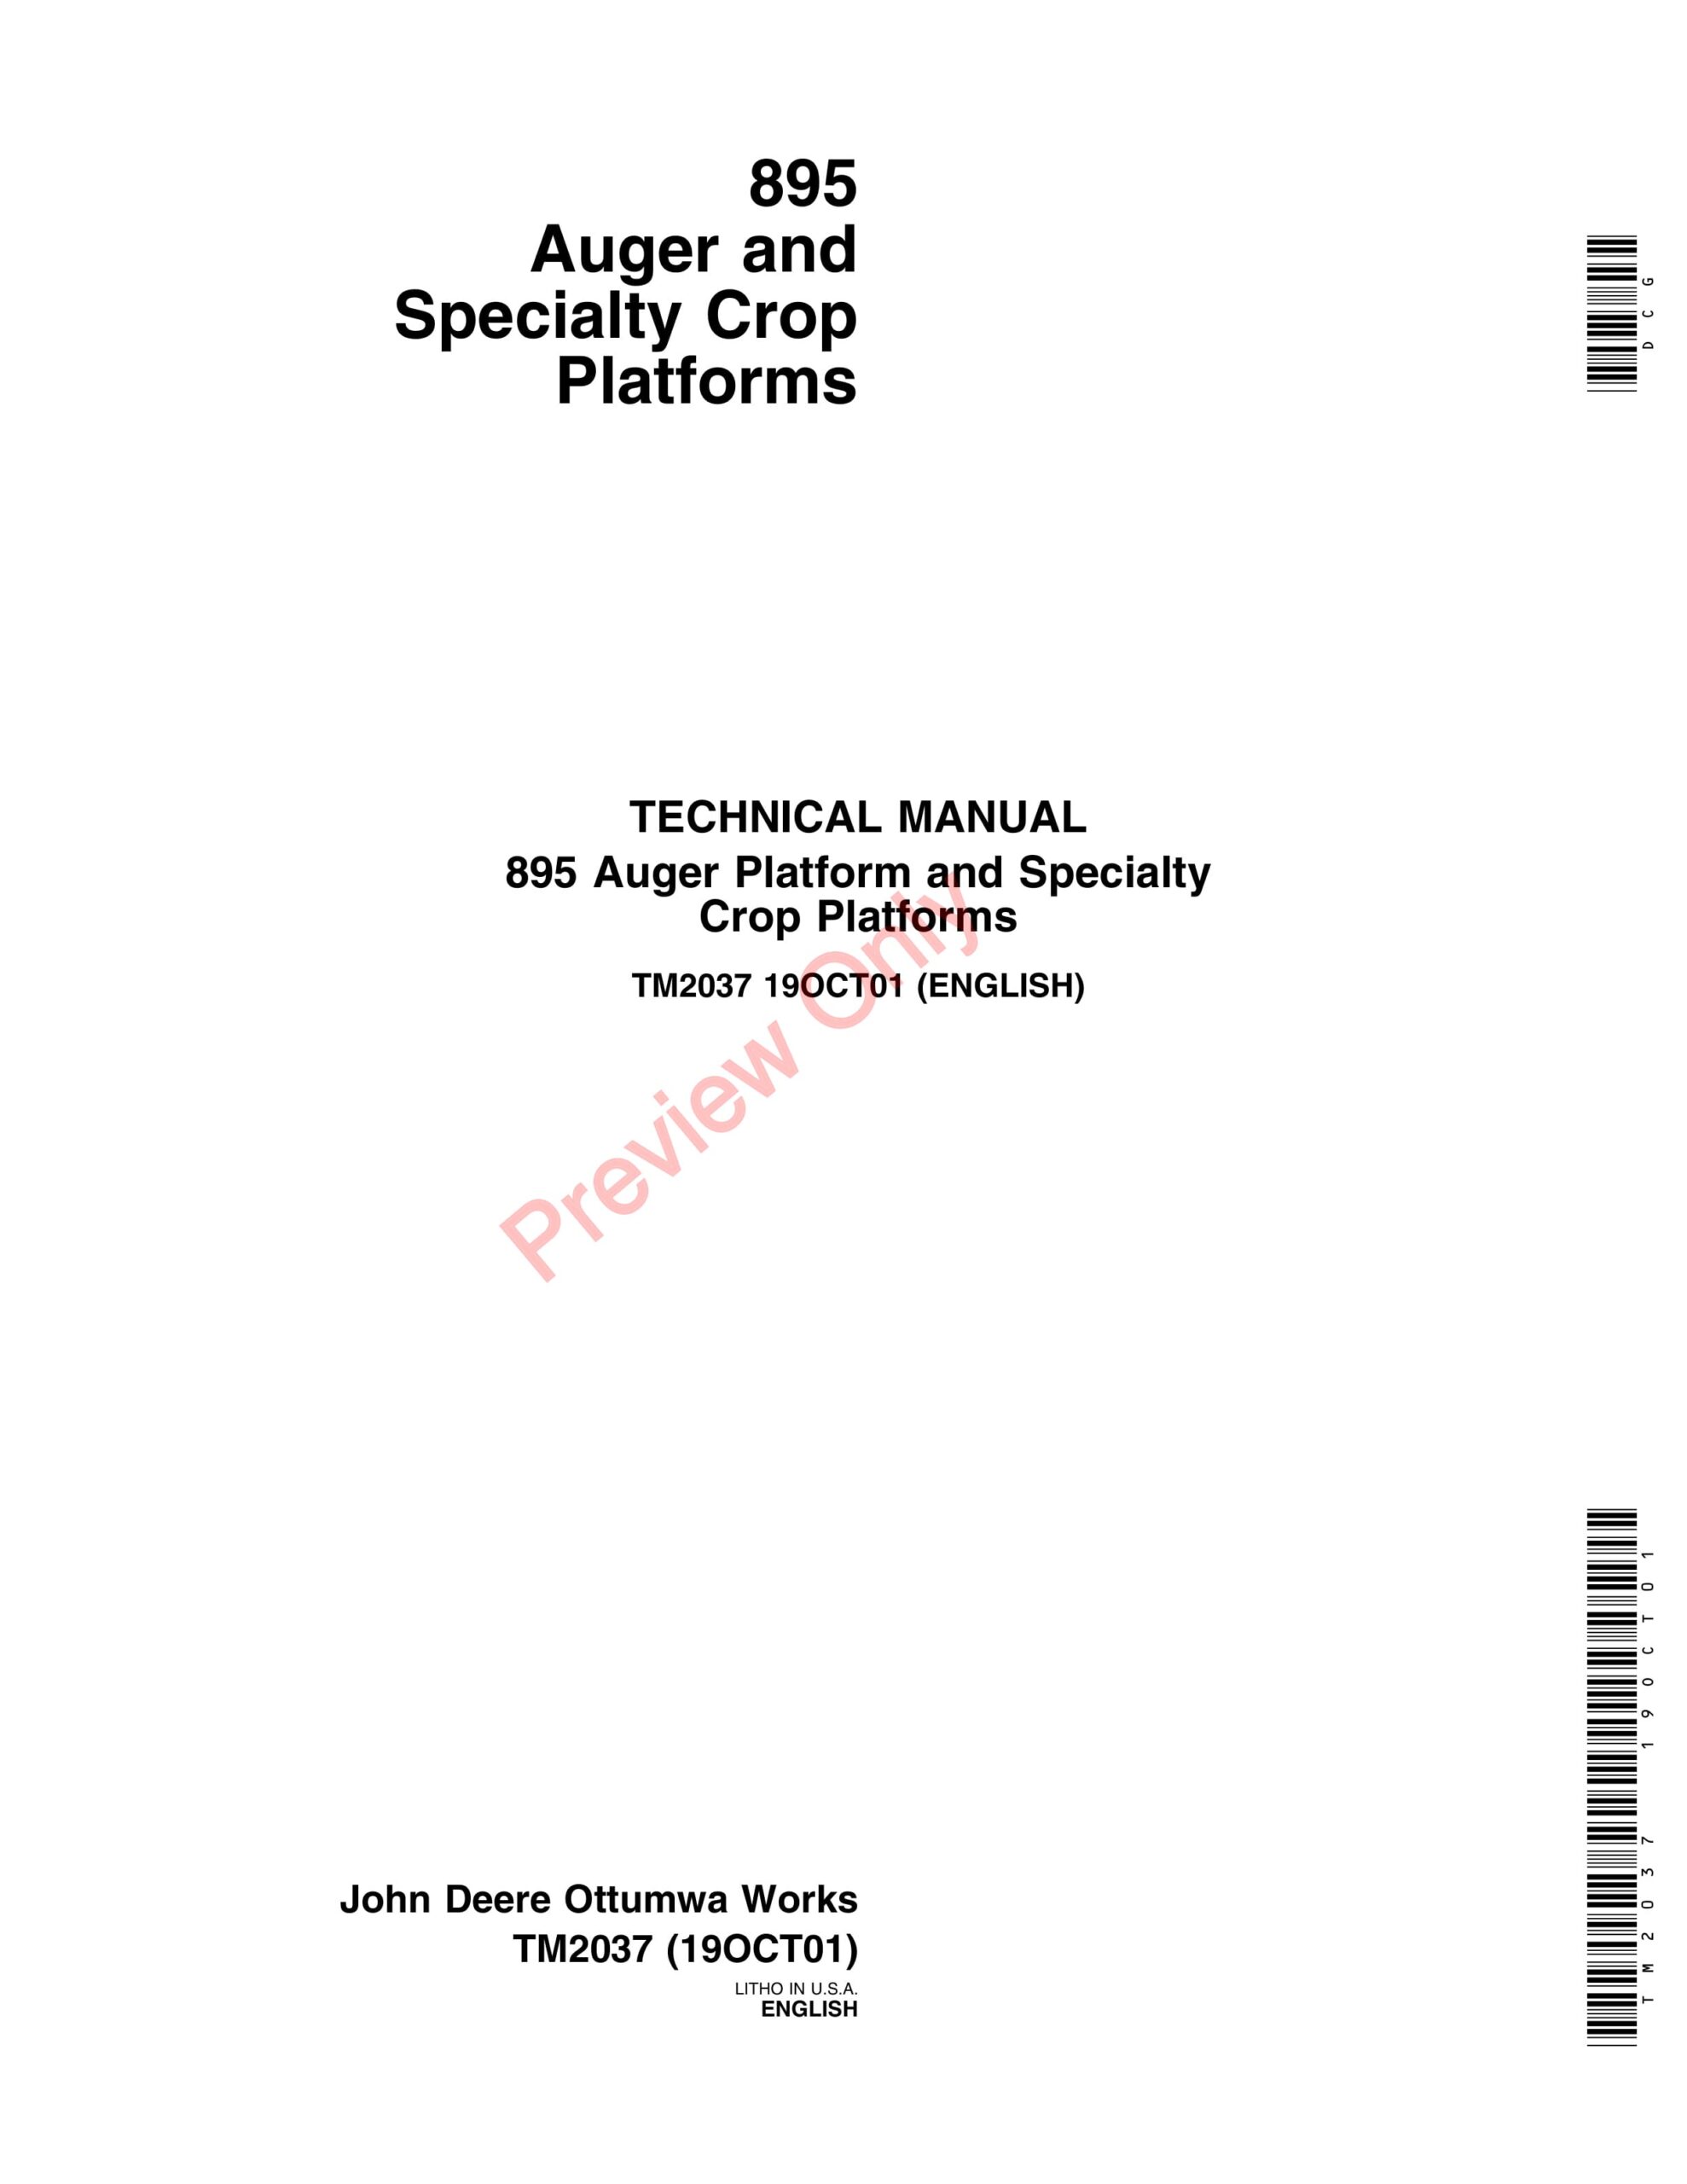 John Deere 895 Auger Platform and Specialty Crop Platforms Technical Manual TM2037 19OCT01-1